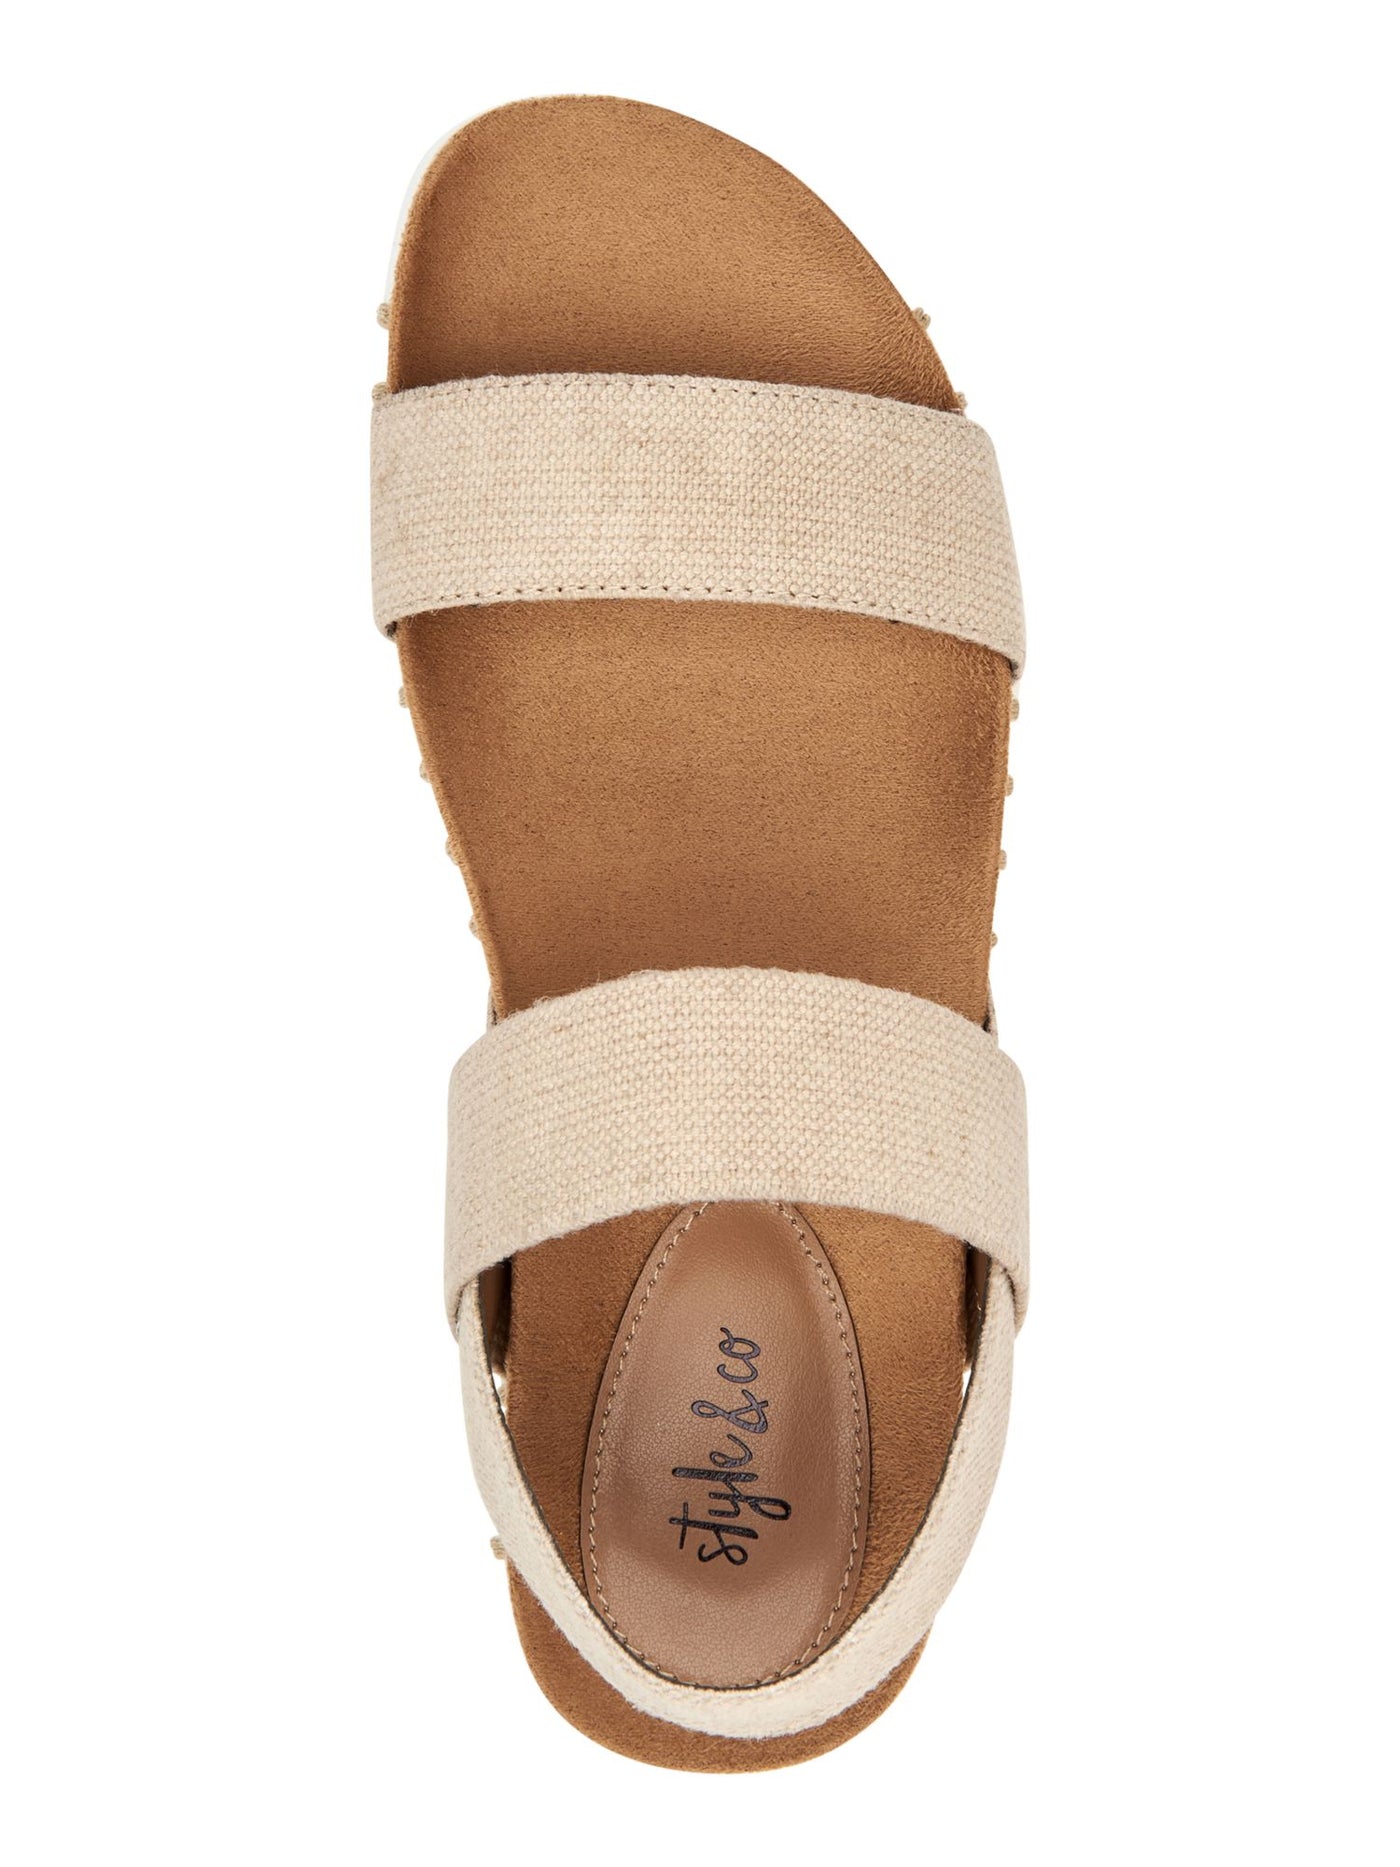 STYLE & COMPANY Womens Beige 1" Platform Stretch Comfort Milaa Round Toe Wedge Slip On Slingback Sandal 8 M